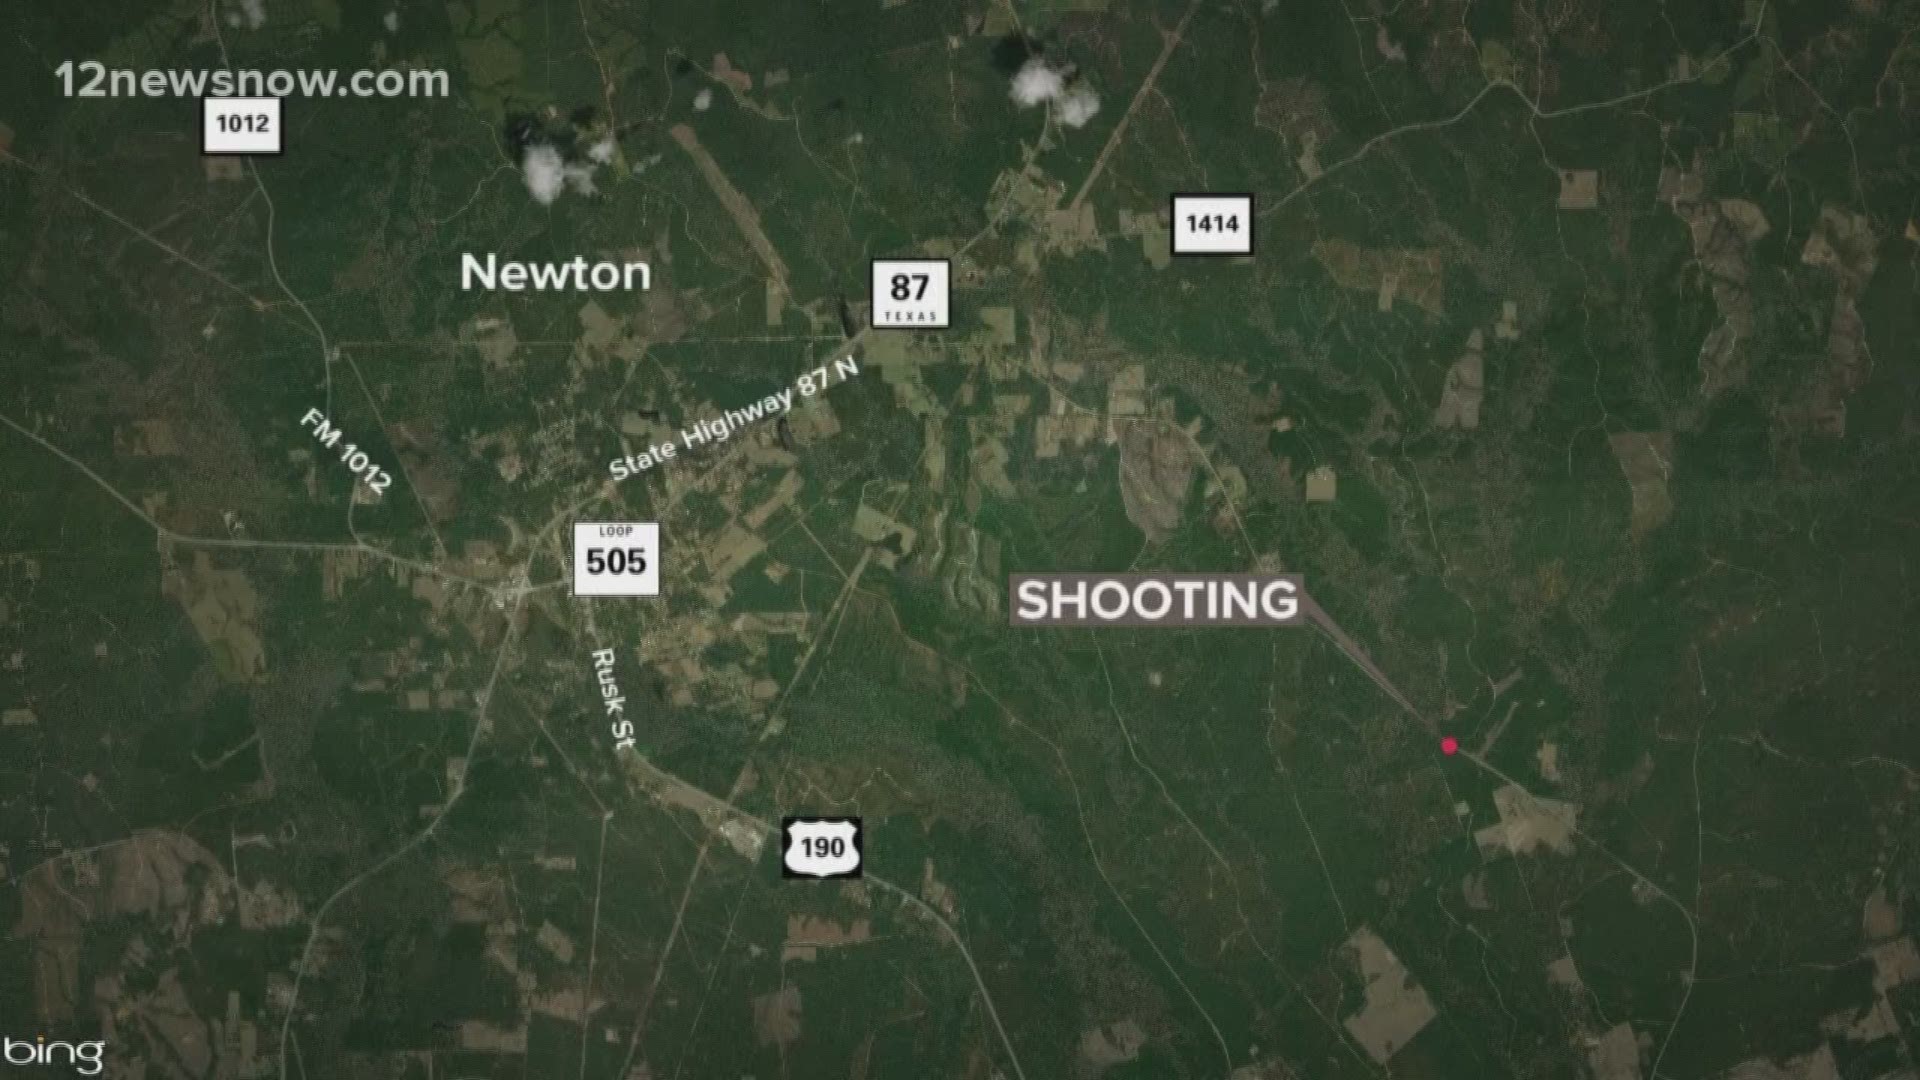 Matthew Mason was shot on the shooter's property according to investigators